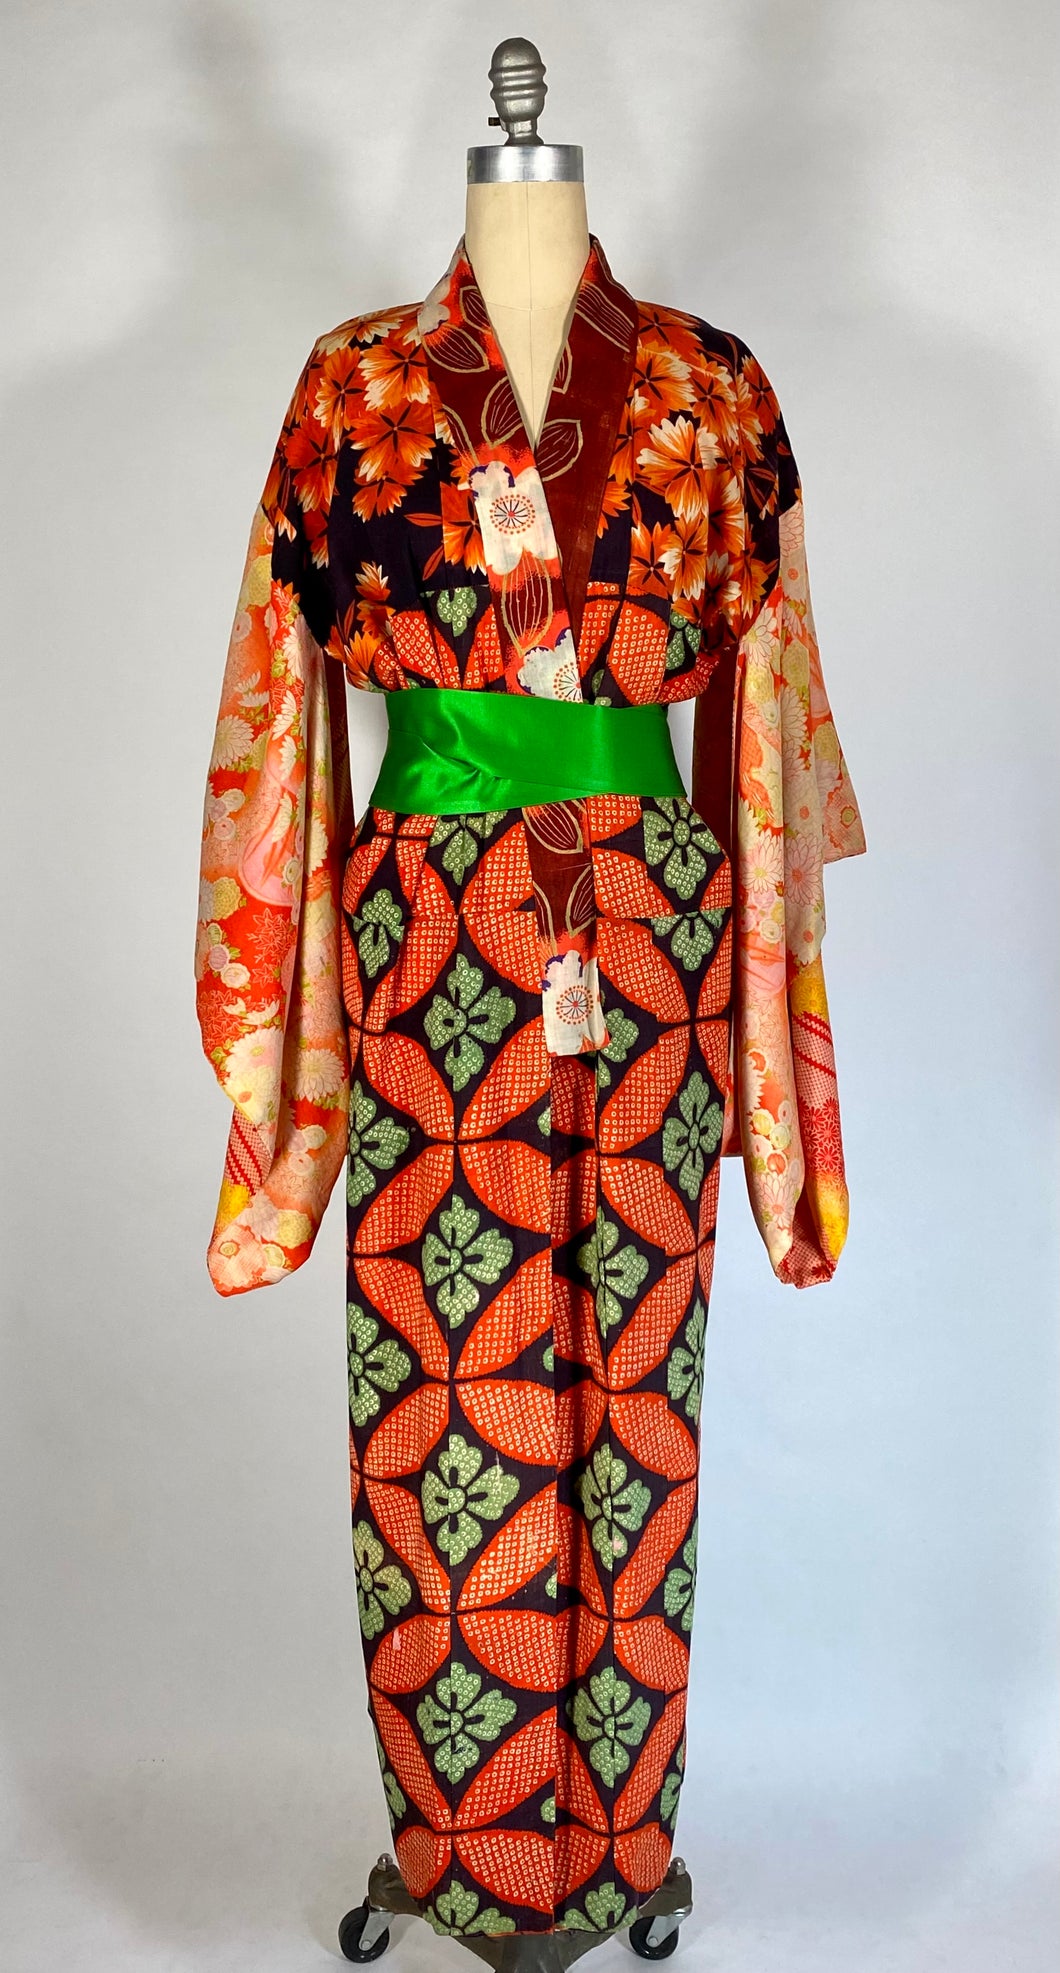 Shōwa Period circa 1920's-1940's RARE mix print silk Japanese juban kimono robe